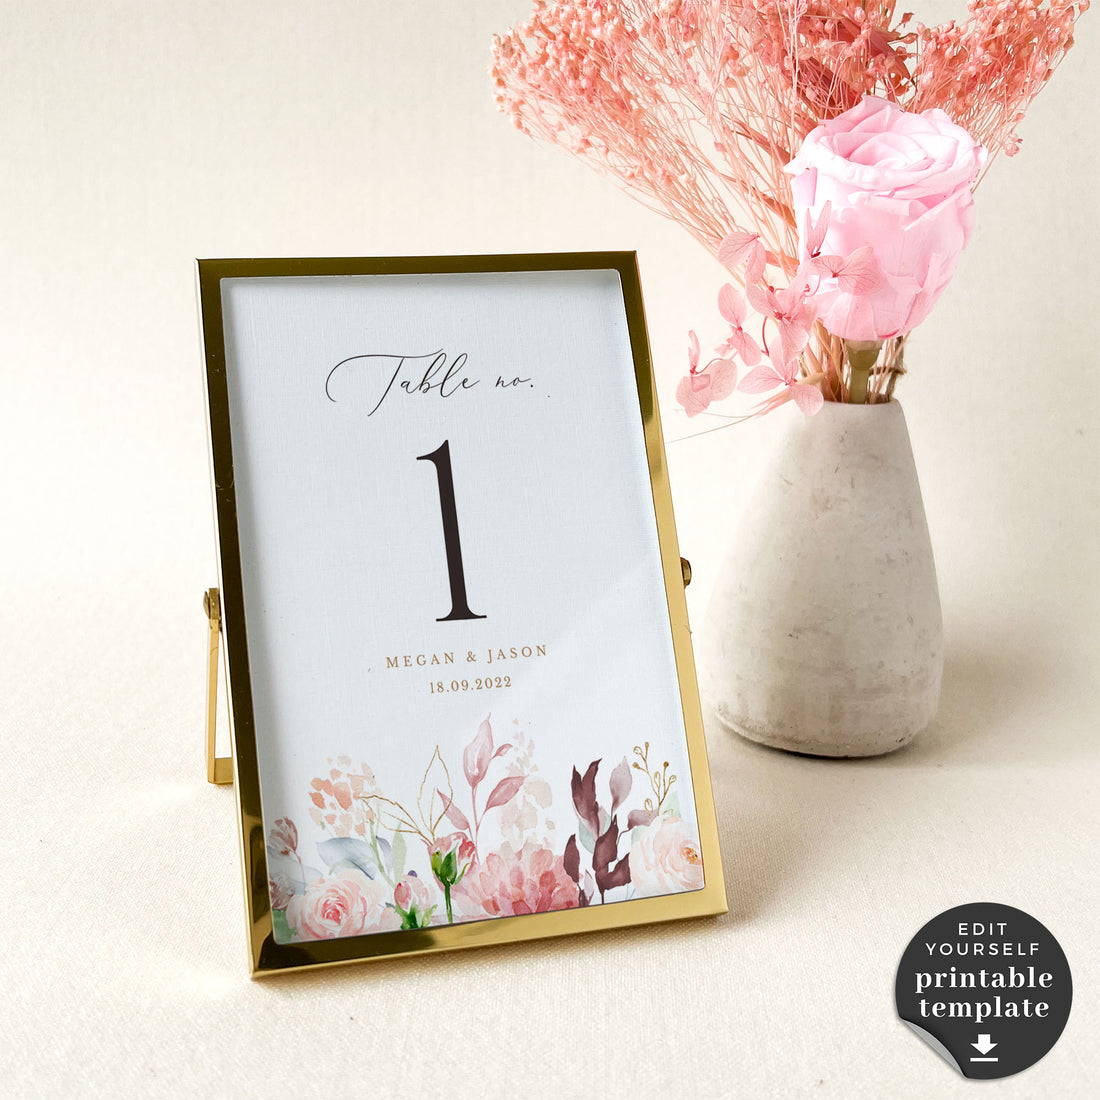 Fiorella | Romantic Wedding Table Cards Template